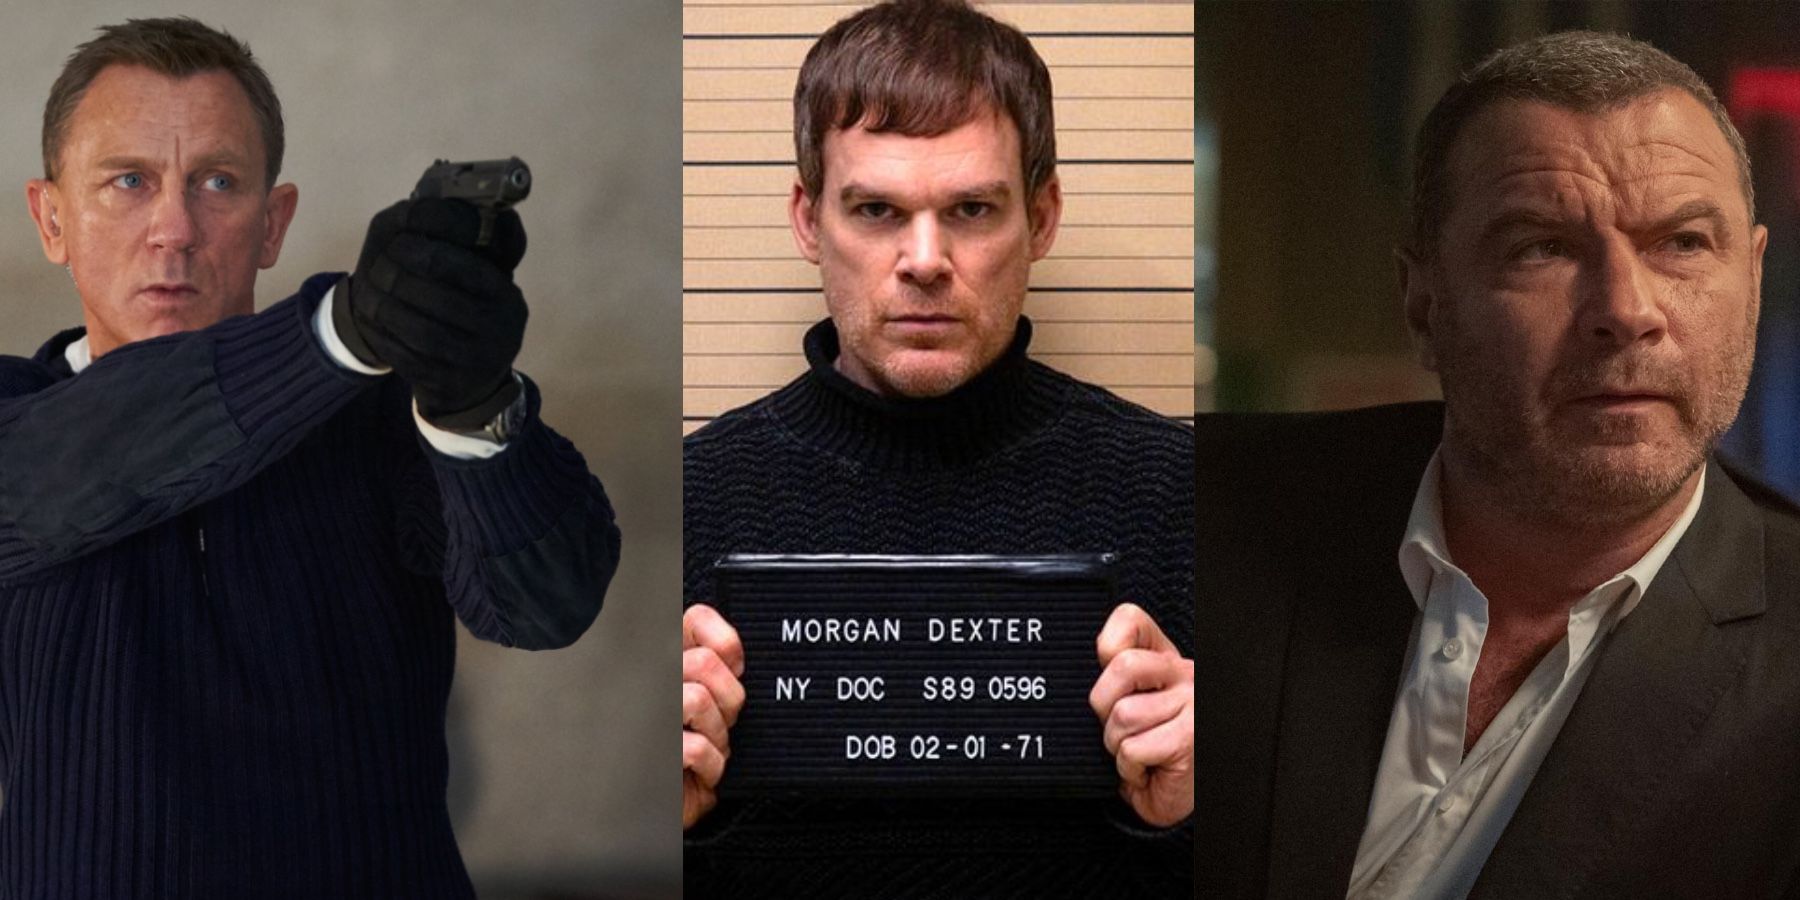 James-Bond-Dexter-Morgan-and-Ray-Donovan